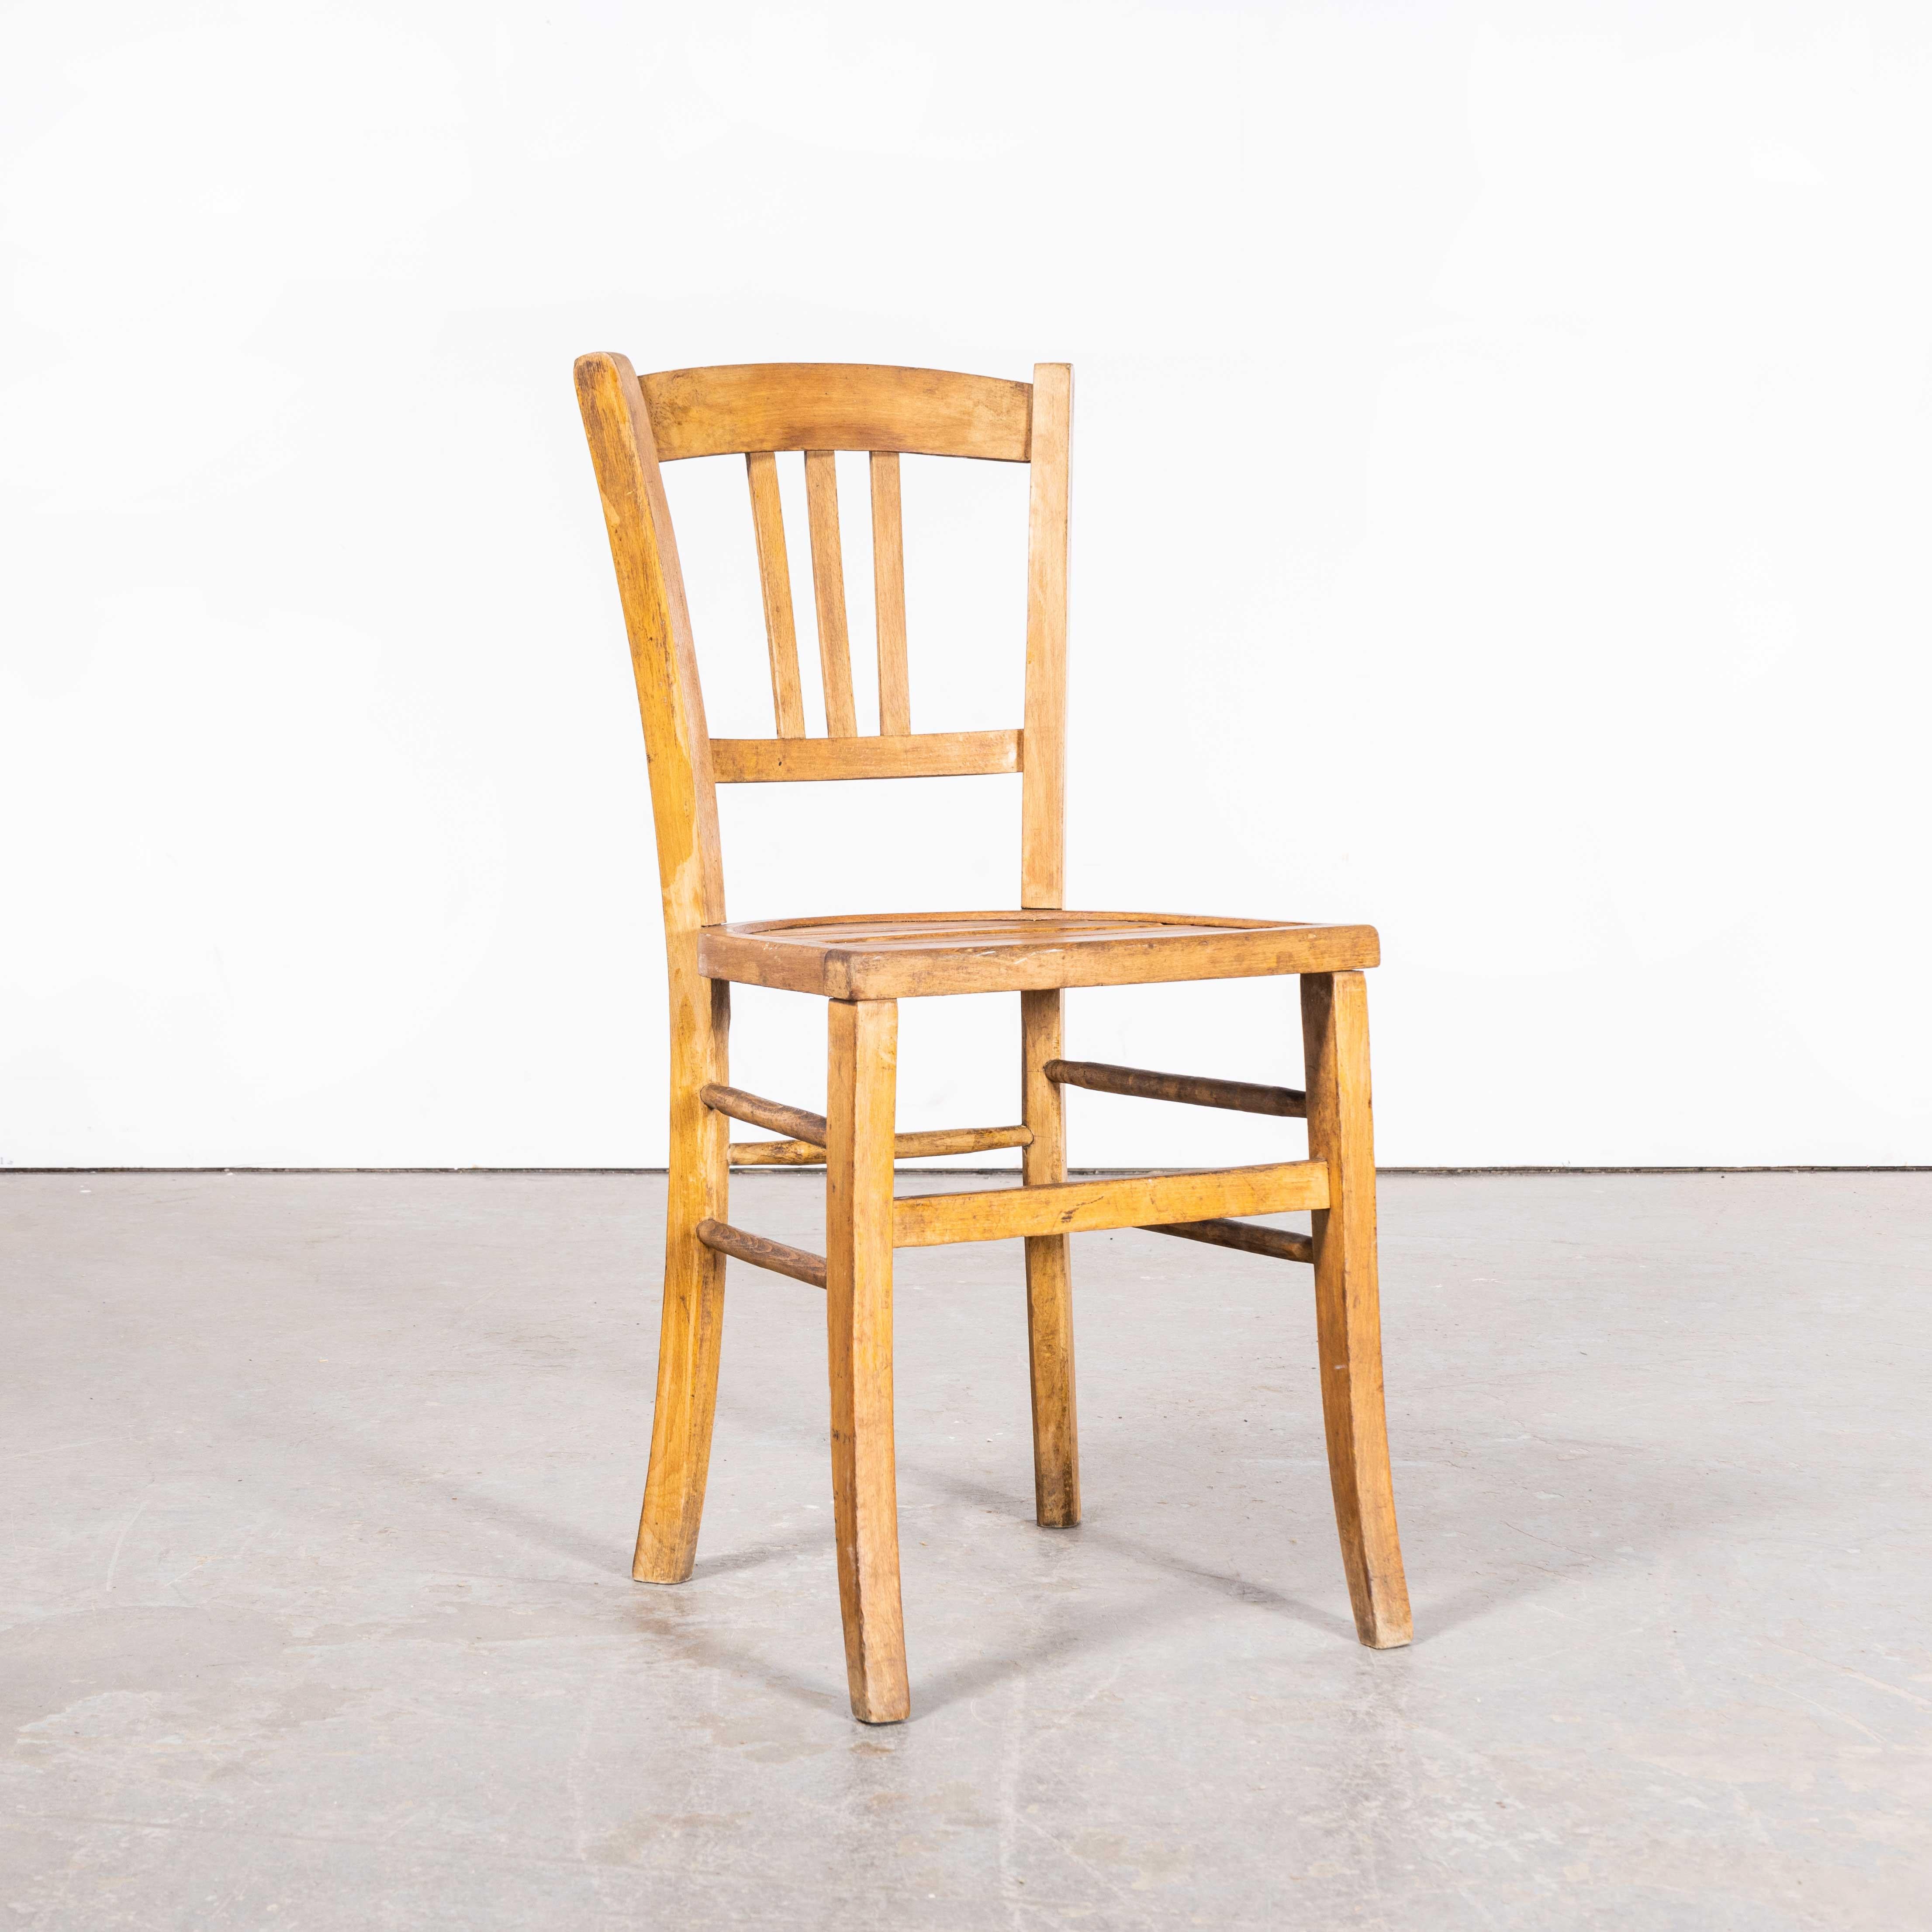 Milieu du XXe siècle Original 1950's French Slatted Farmhouse Chairs From Provence - Set Of Ten en vente